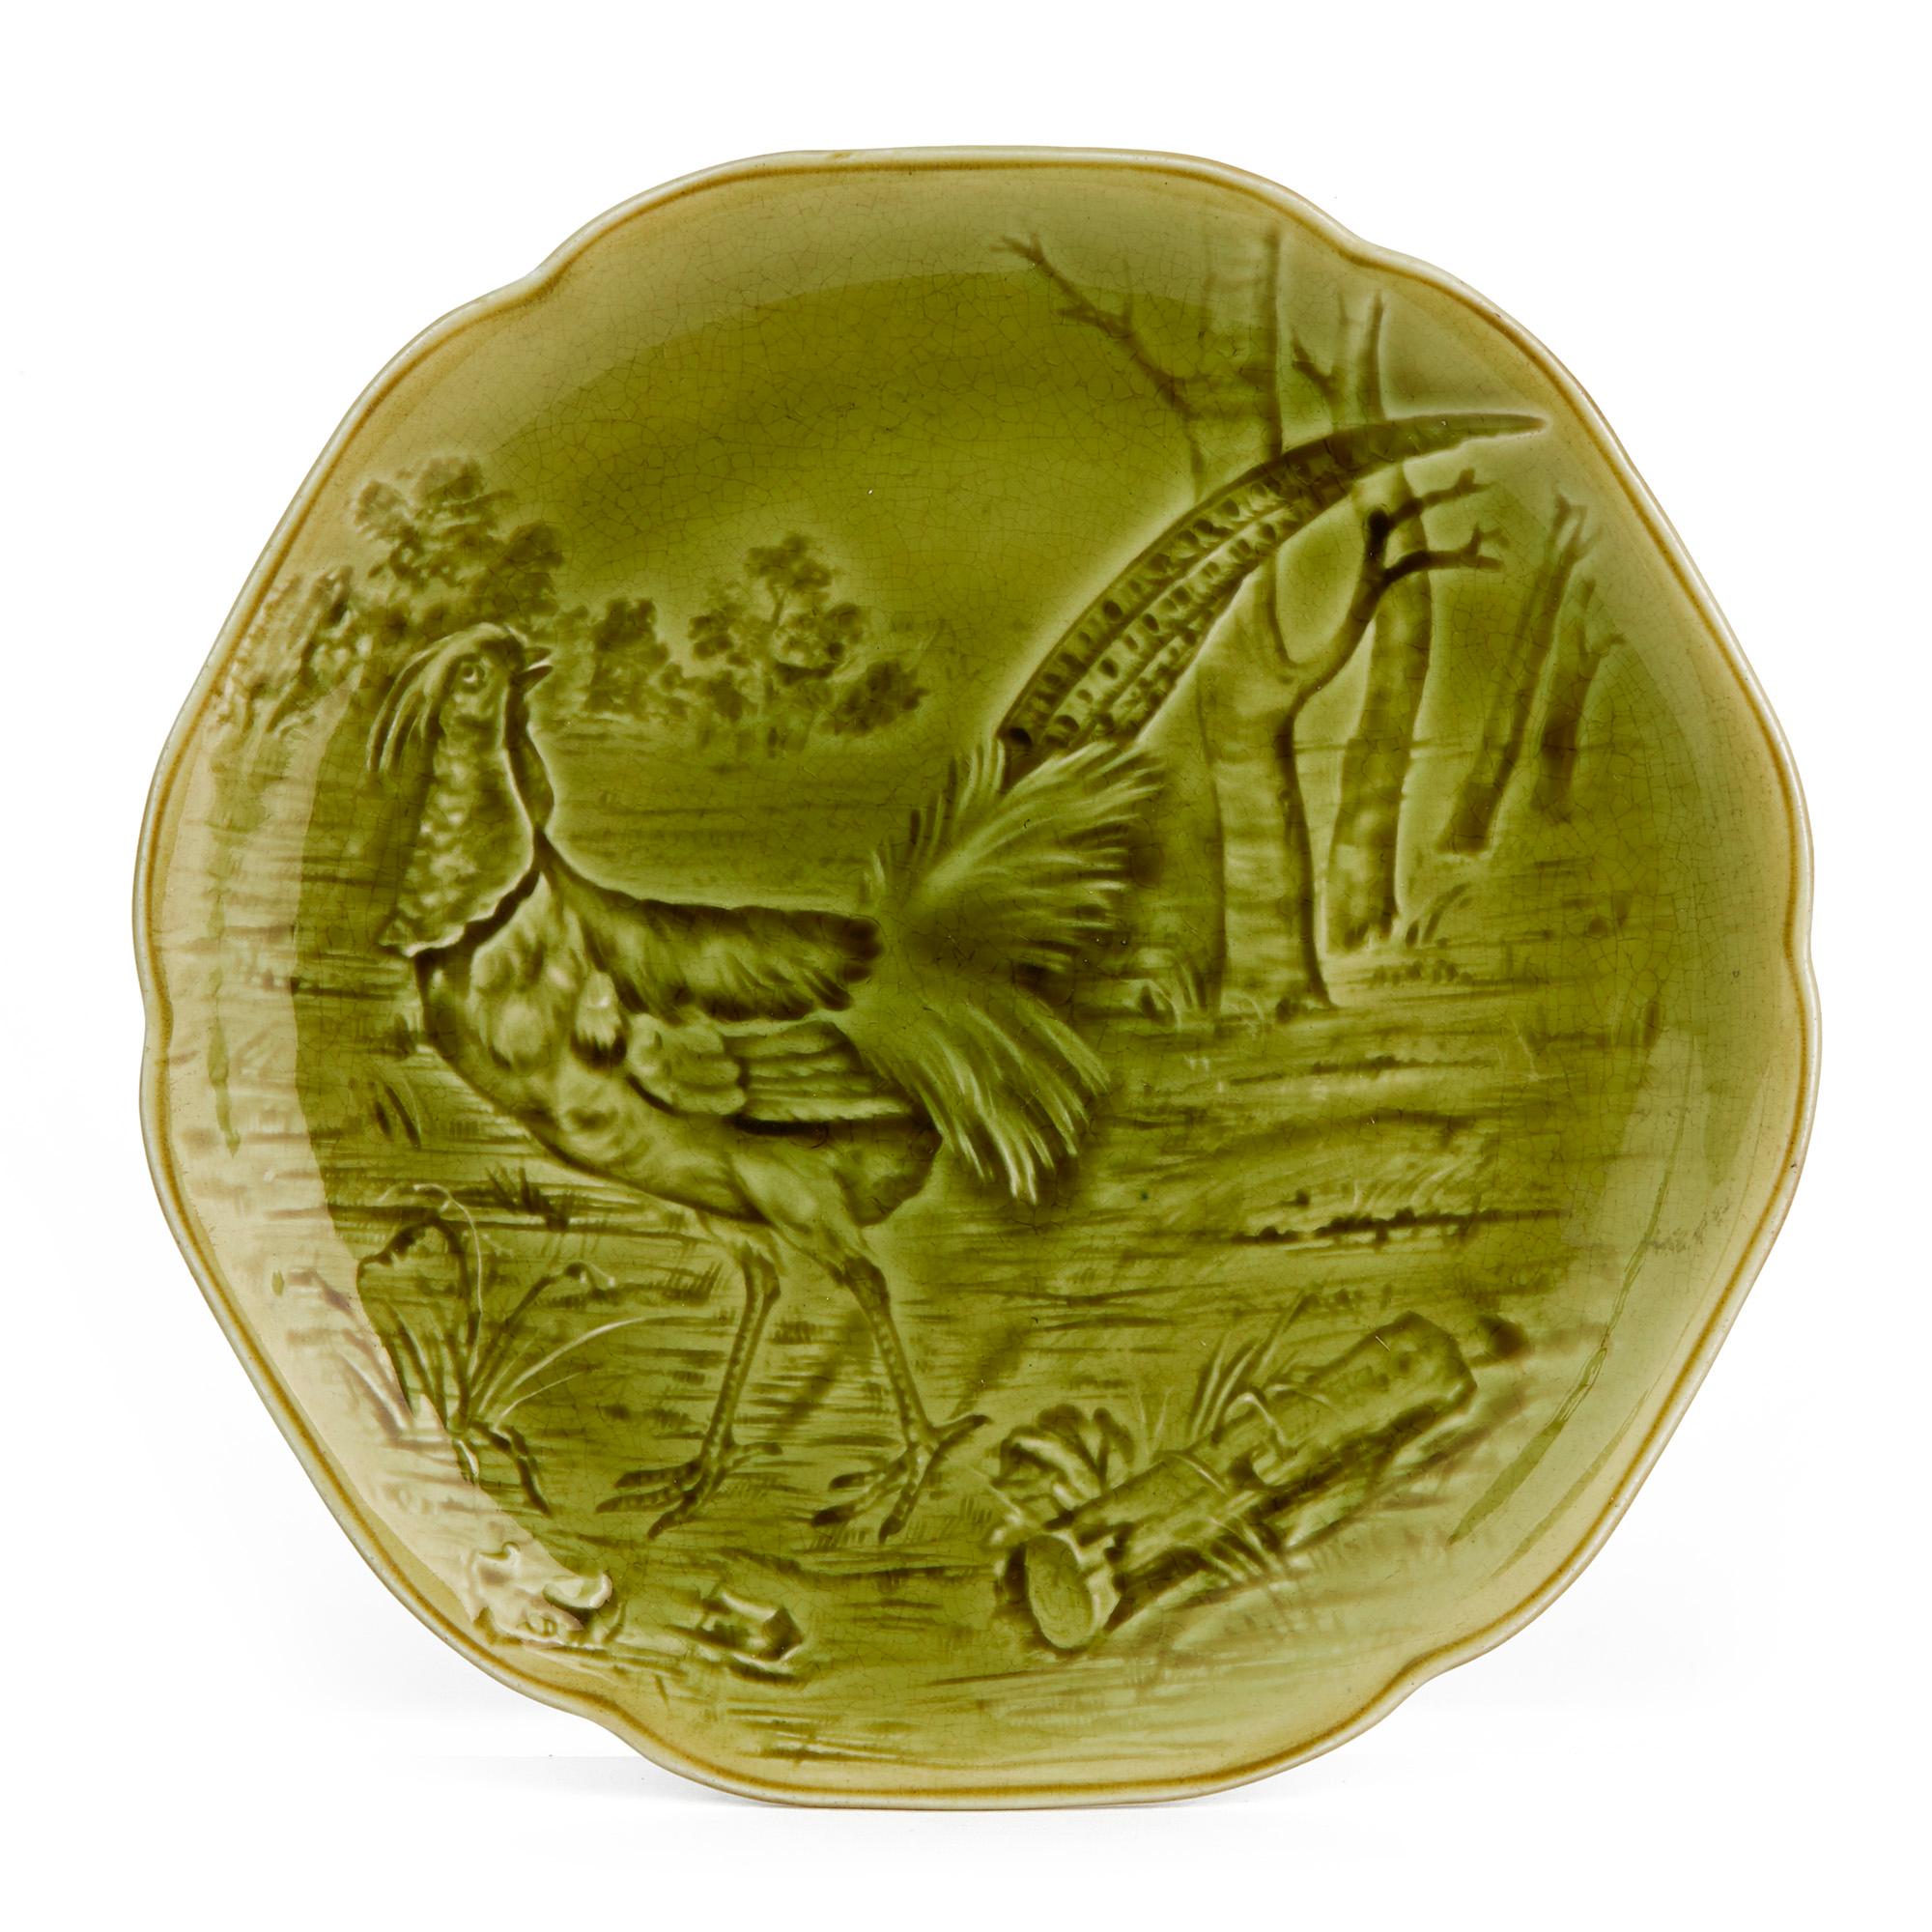 Grüner Majolika-Teller mit Fasanenmotiv von Choisy-le-Roi, 19. Jahrhundert (Ästhetizismus) im Angebot